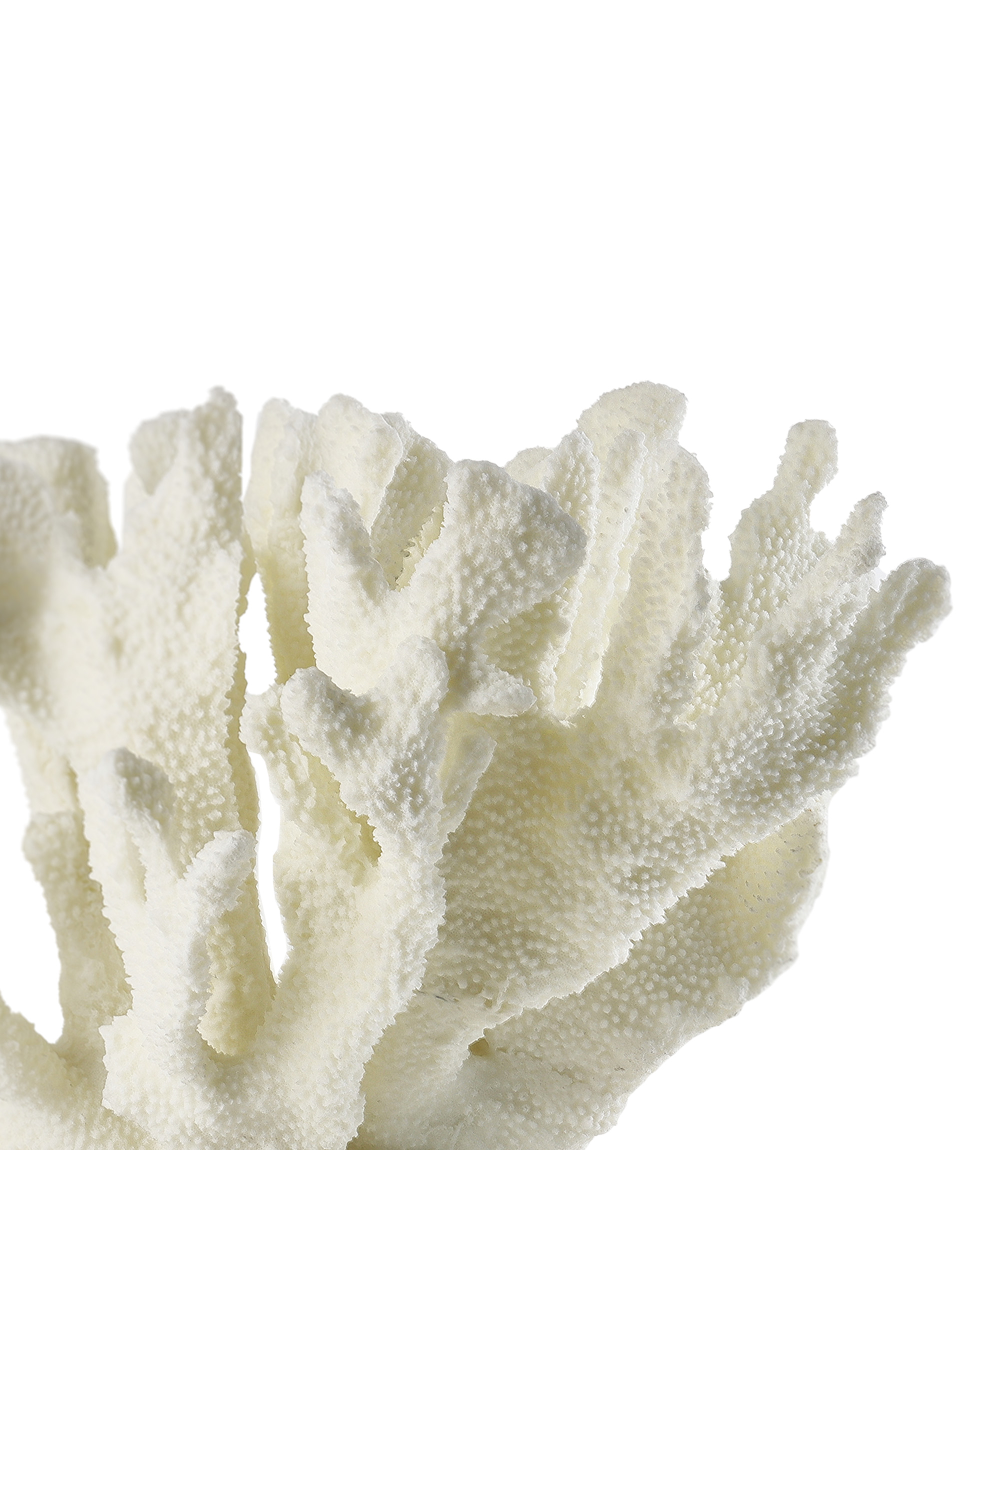 White Coral Sculpture | Liang & Eimil Rara | Oroa.com